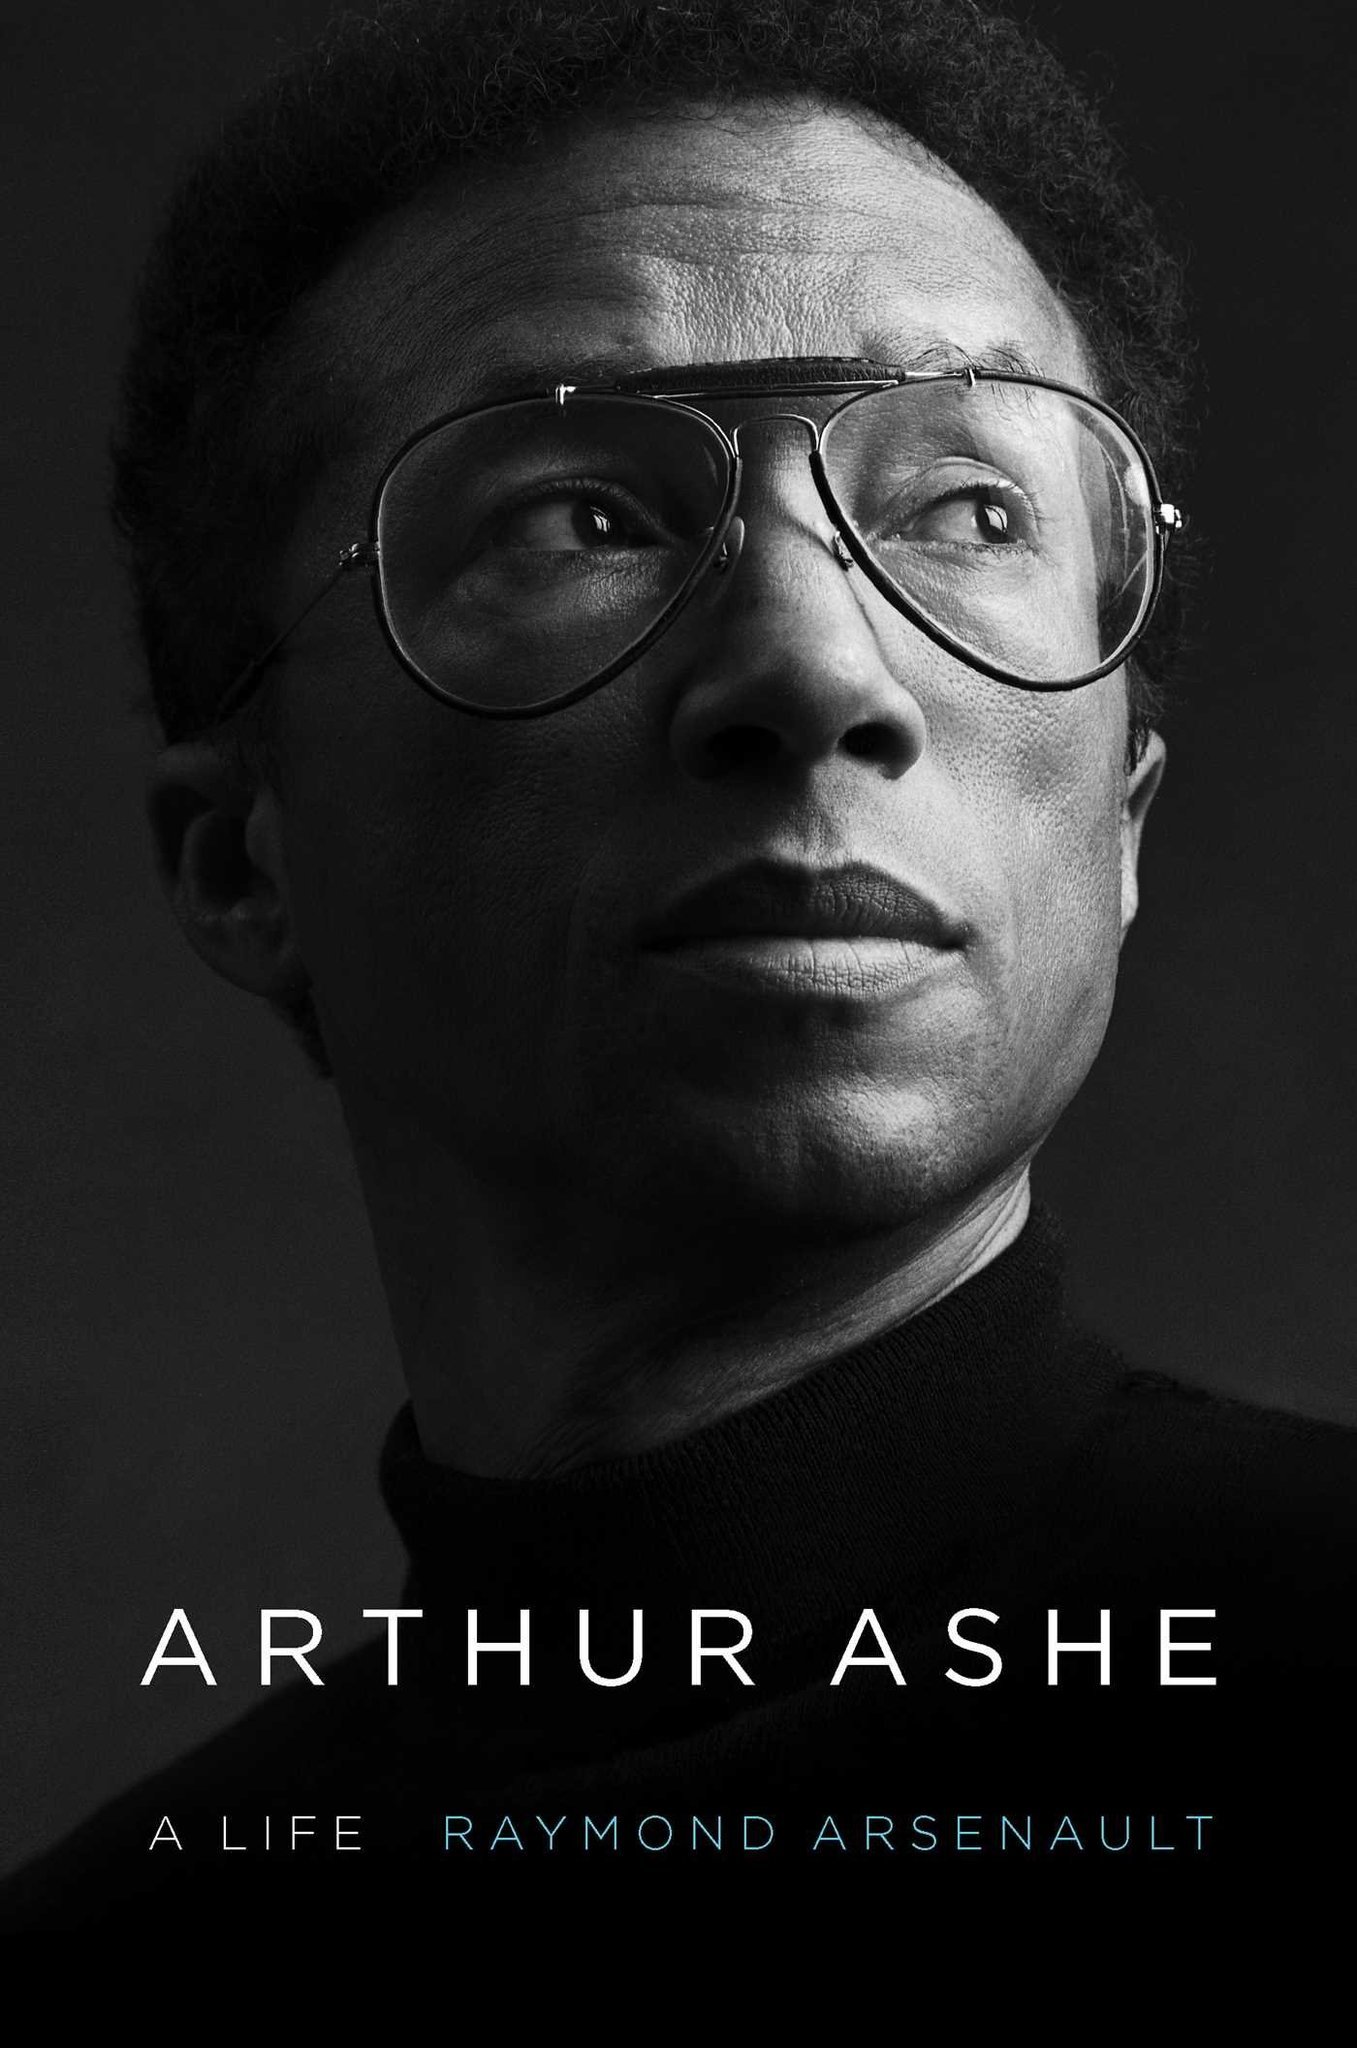 “Arthur Ashe: A Life”